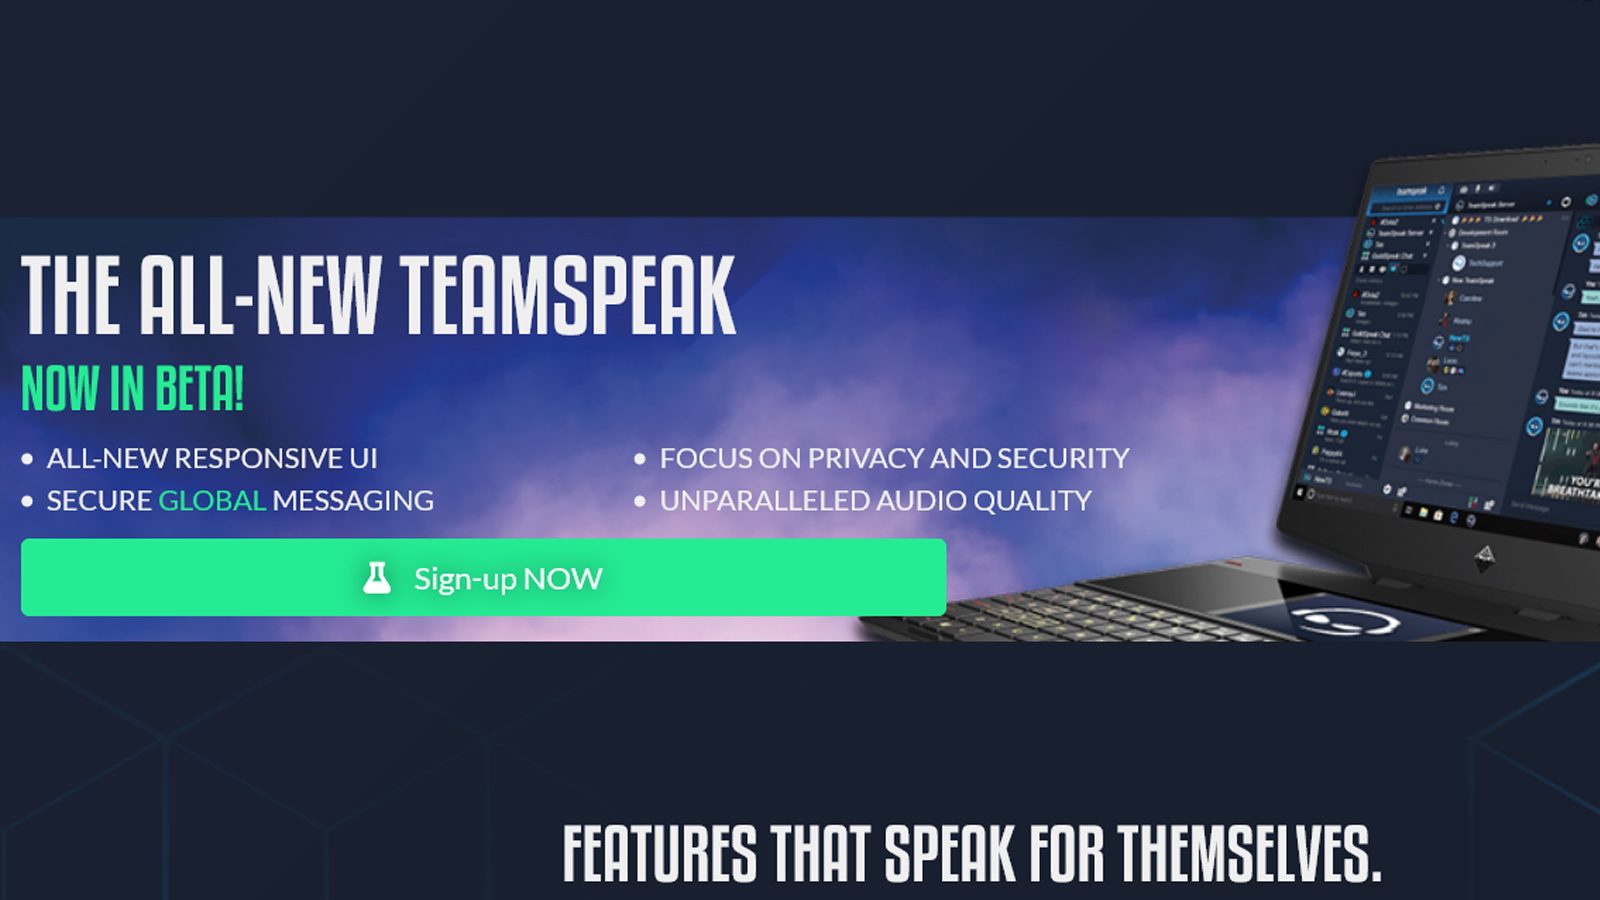 Find detailed information about TeamSpeak